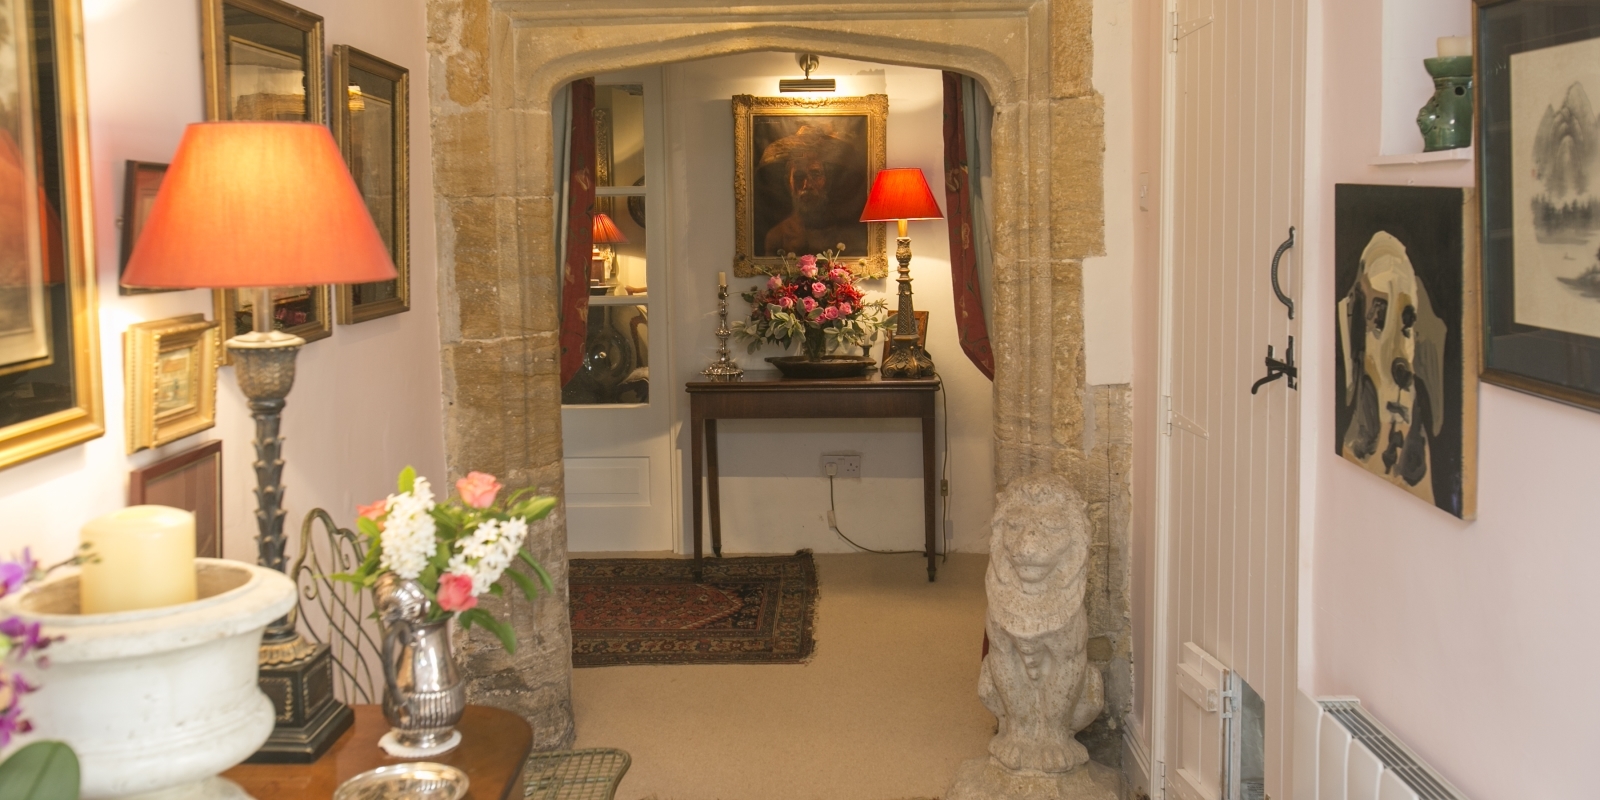 Enjoy a peaceful stay at Tudor Cottage Dorchester